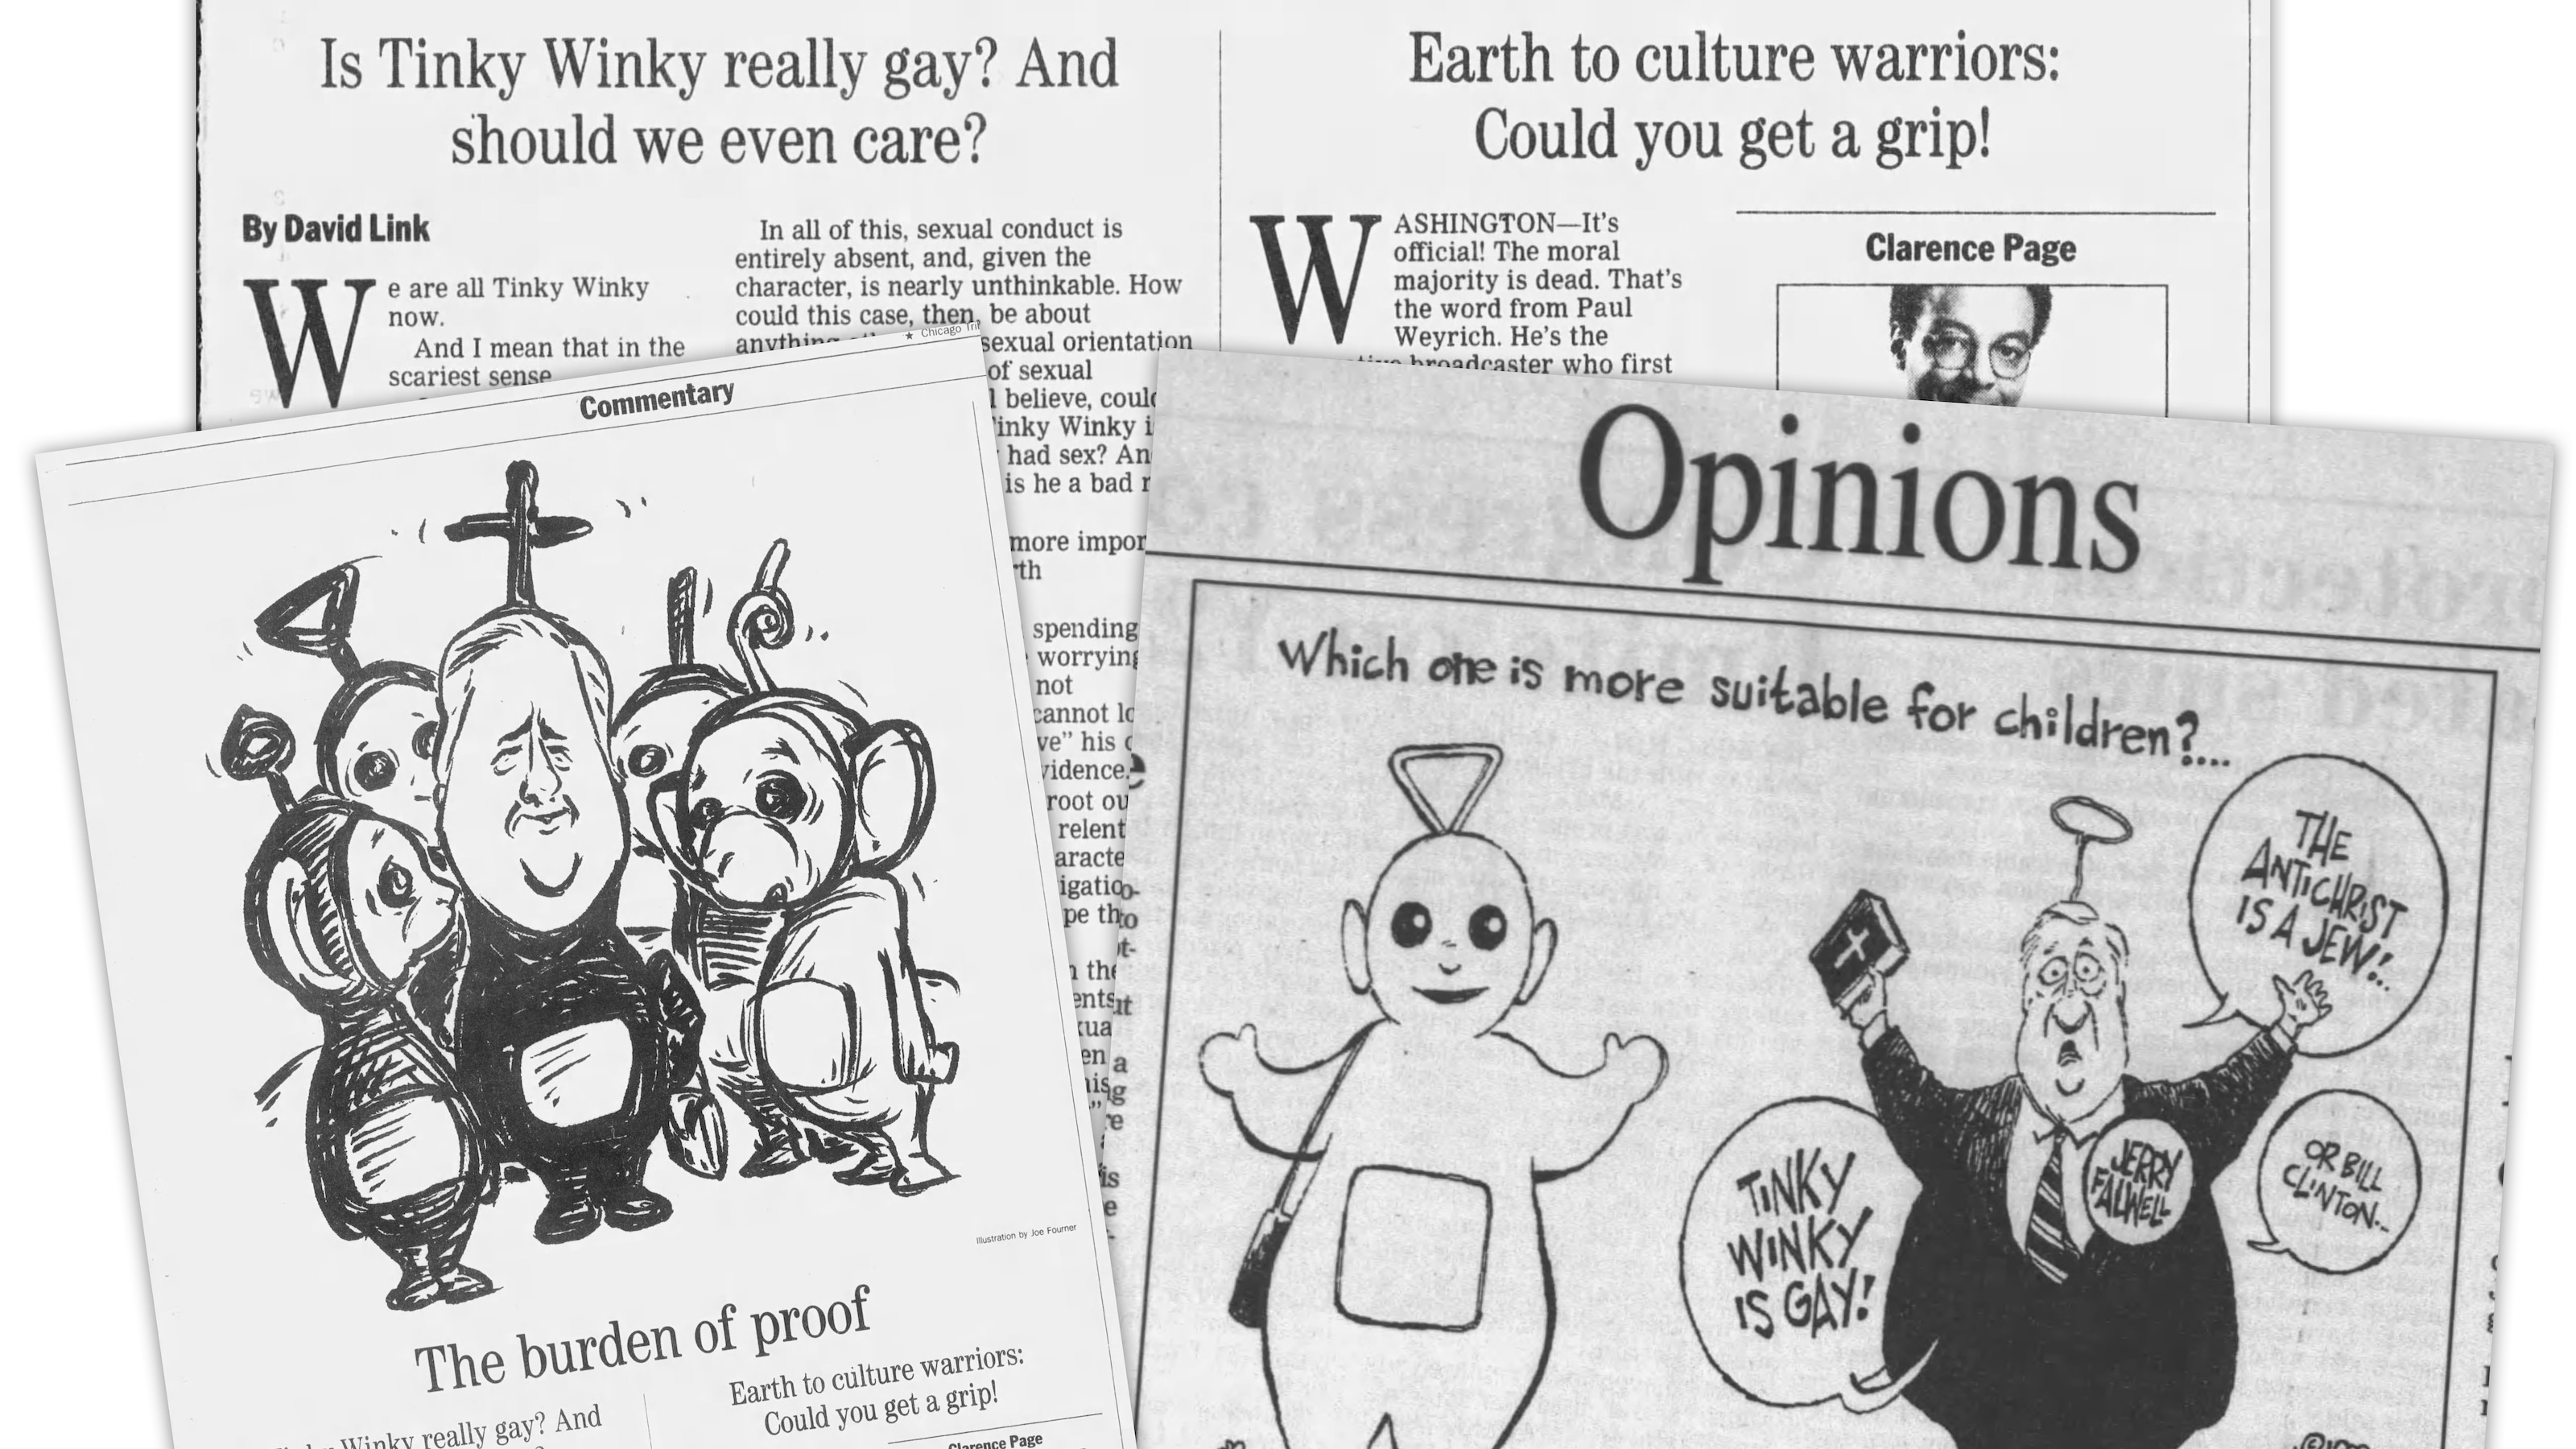 Cartoons have made kids gay Satan worshipers for a century - Big Think